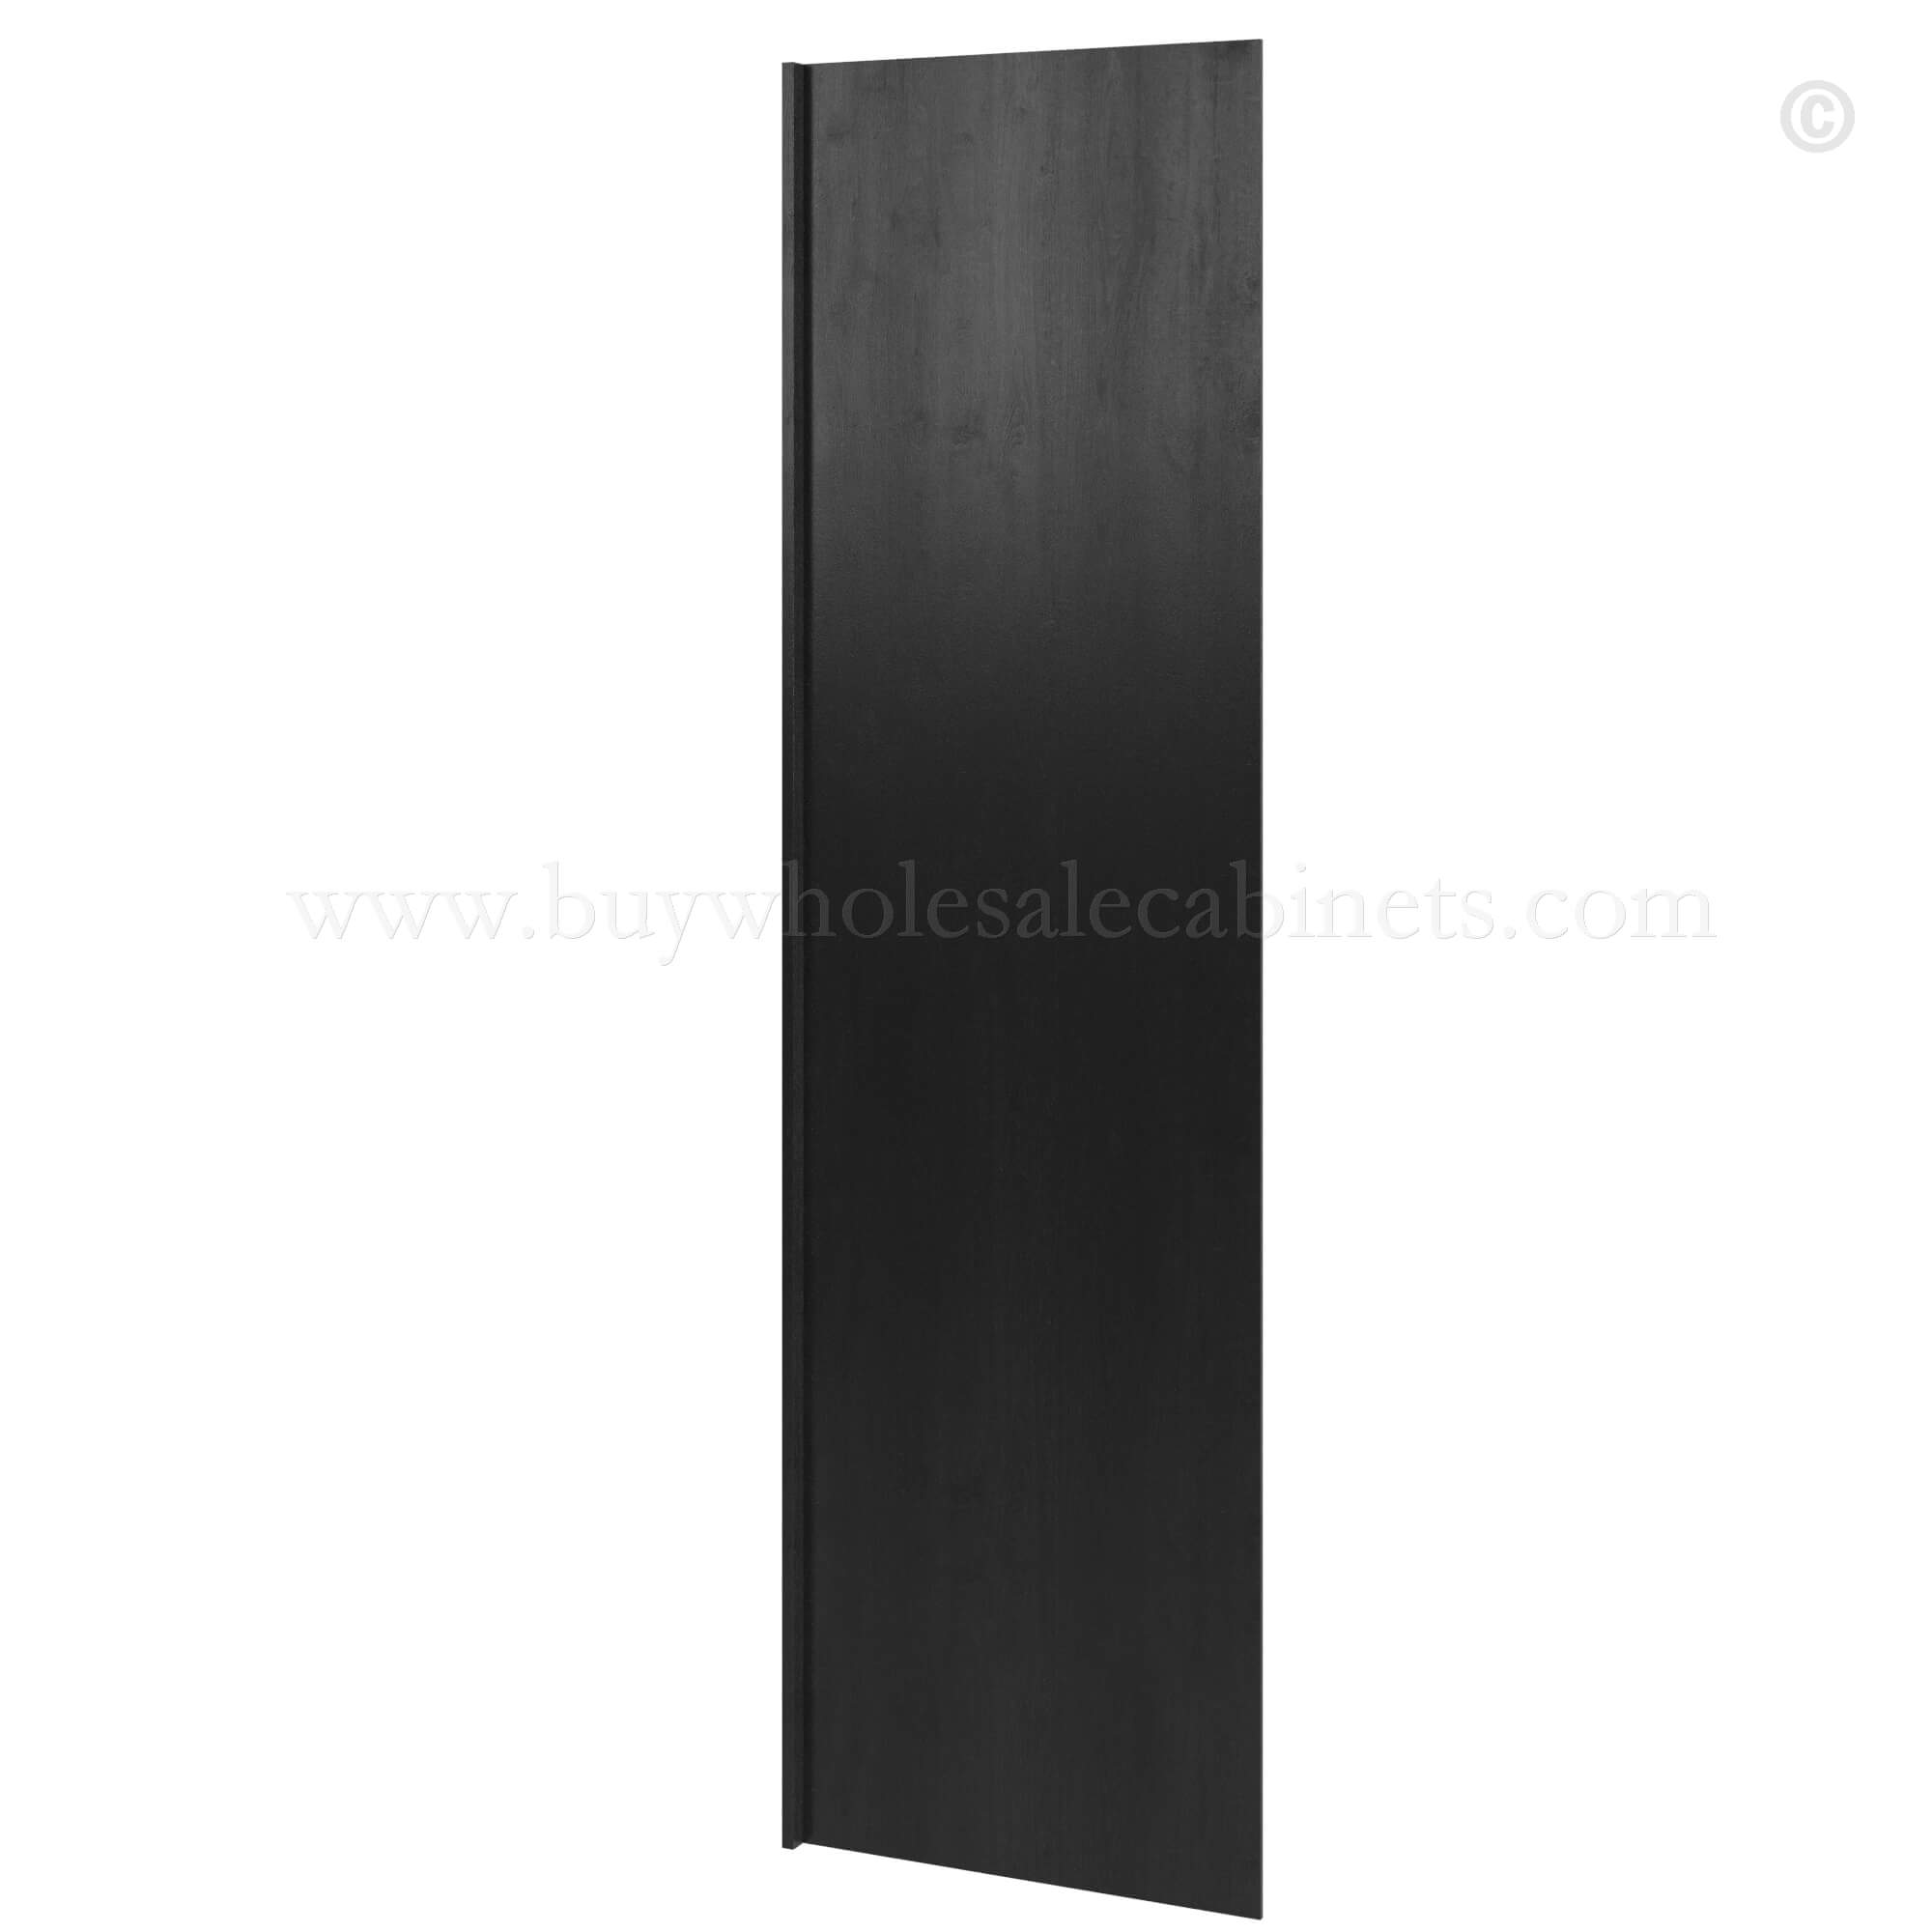 Charcoal Black Shaker Refrigerator Return Panel, rta cabinets, wholesale cabinets